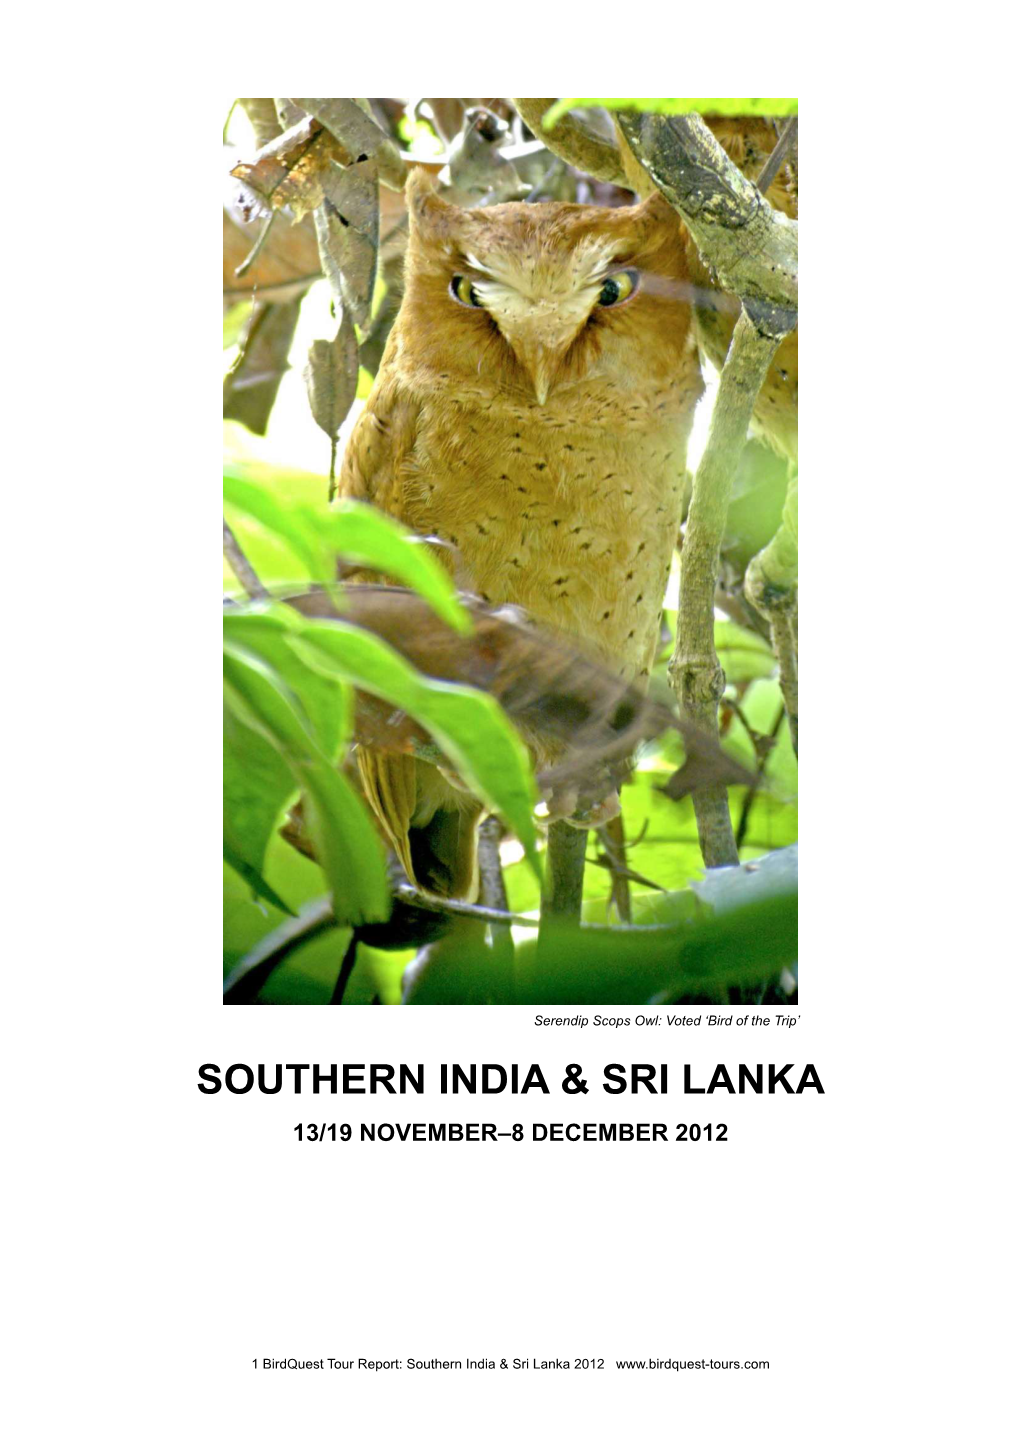 Southern India & Sri Lanka